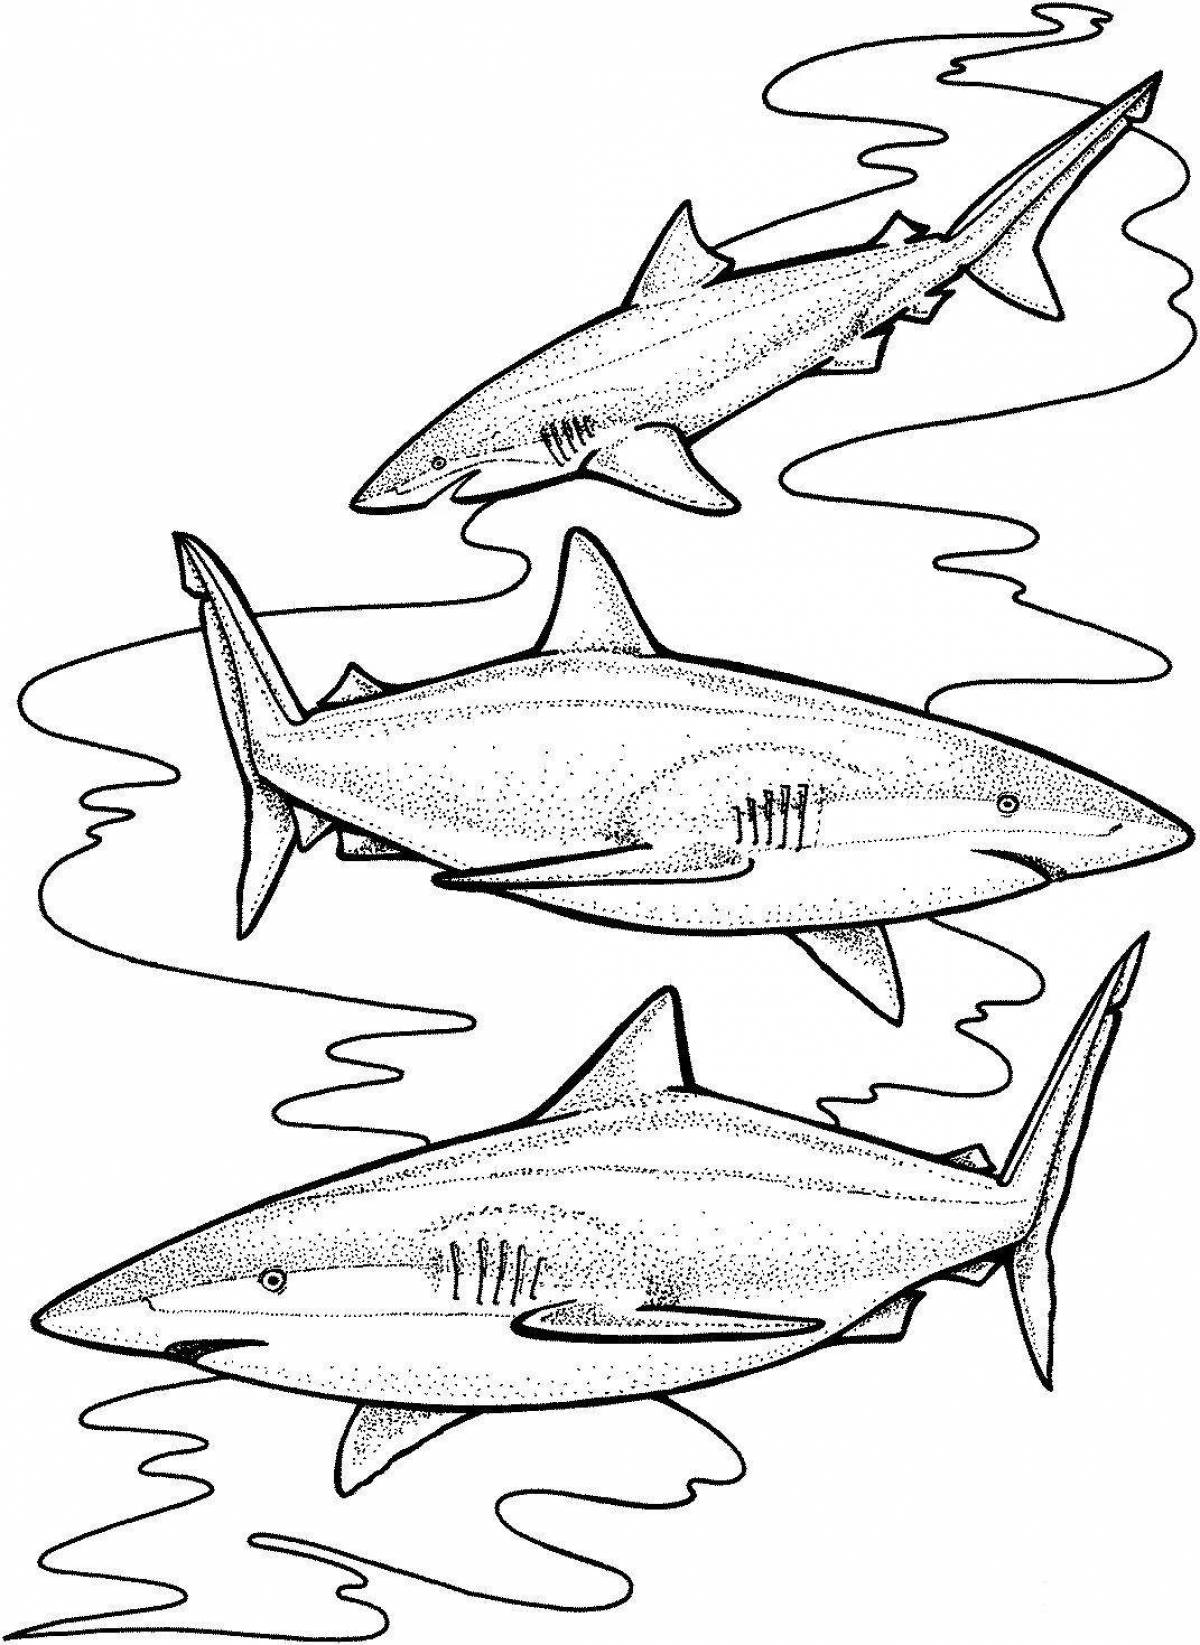 Fascinating tiger shark coloring page